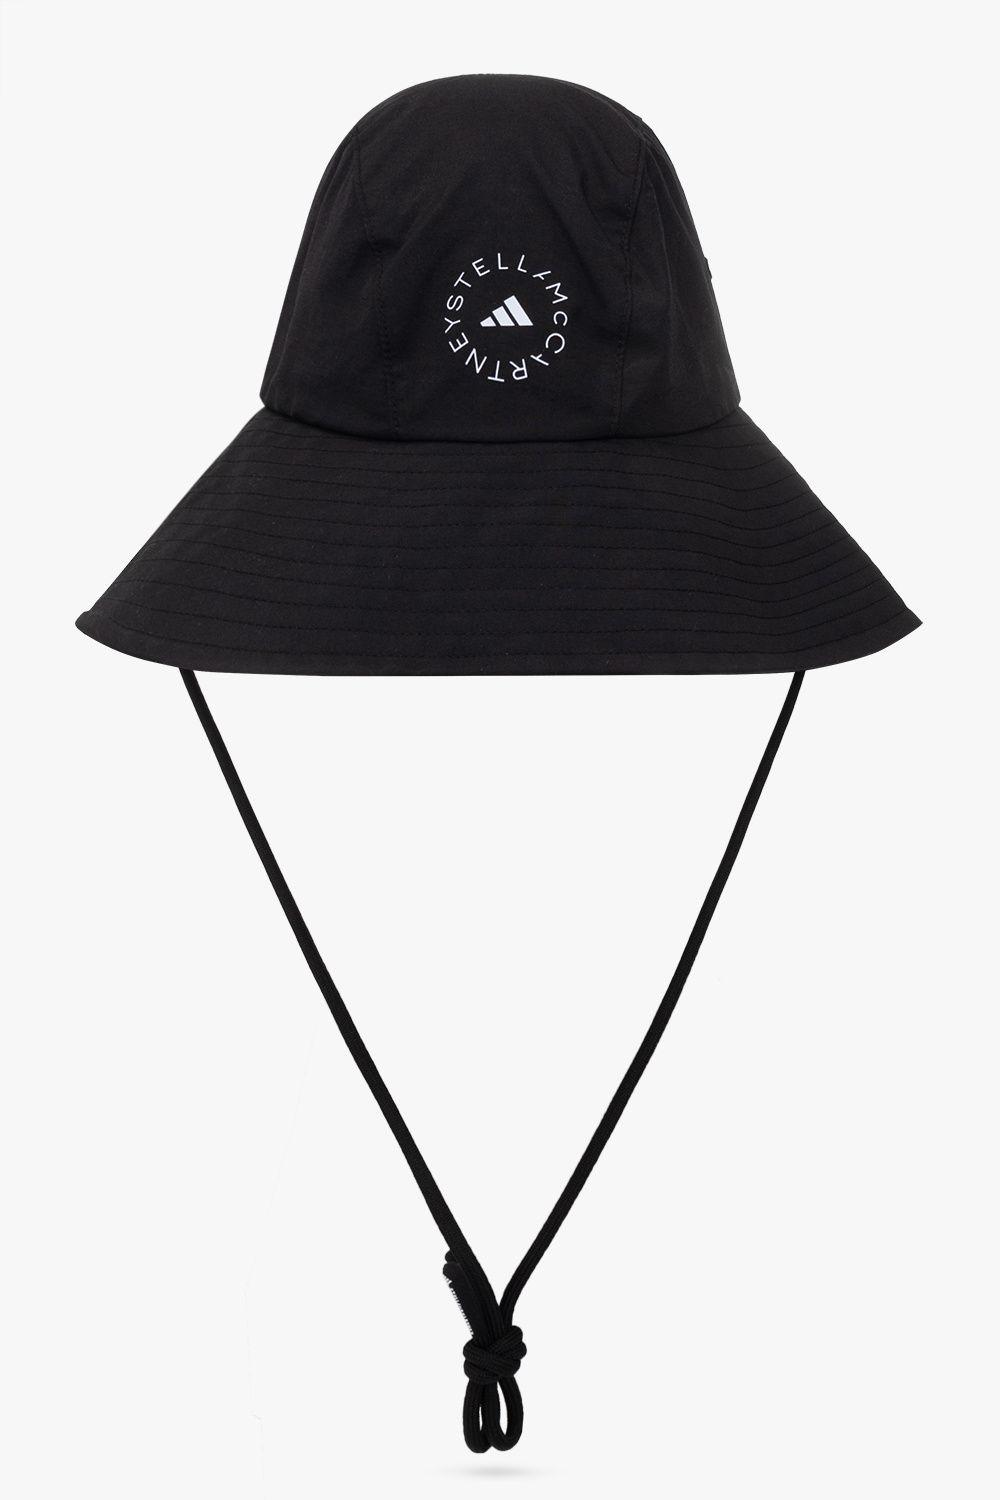 https://cdna.lystit.com/photos/vitkac/0eec094f/adidas-by-stella-mccartney-BLACK-Bucket-Hat-With-Logo.jpeg